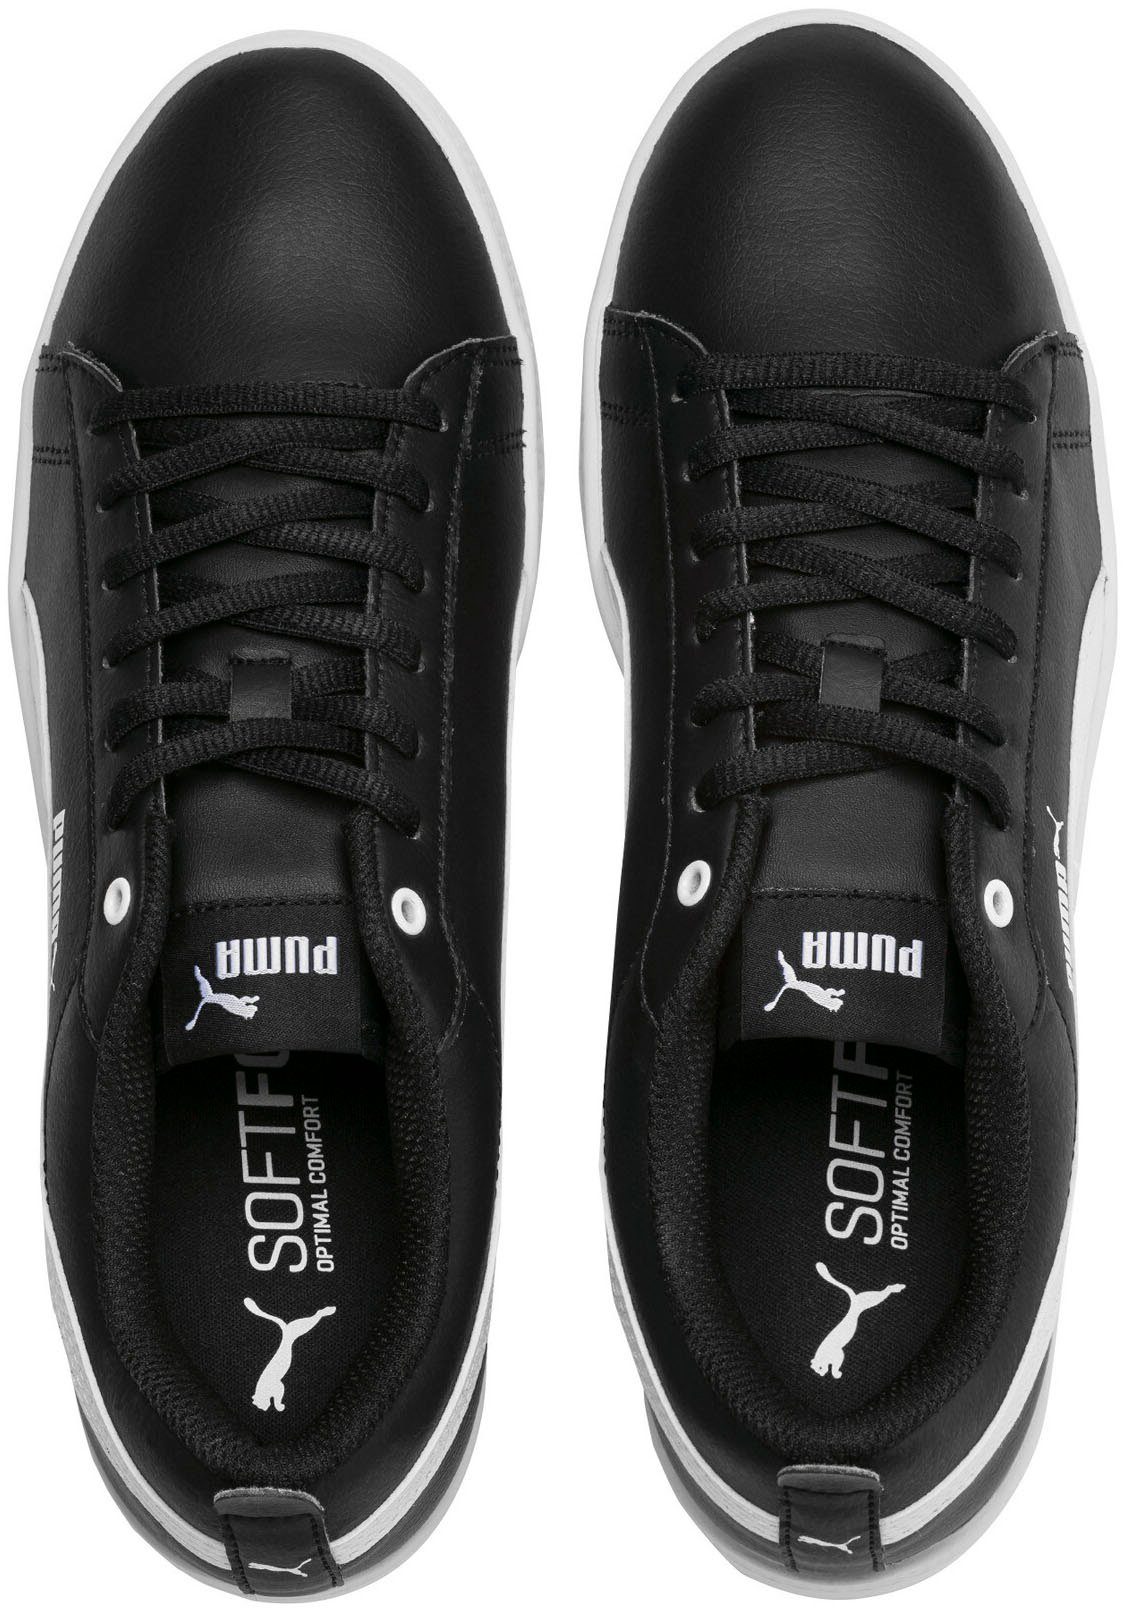 White V2 SMASH Sneaker L WNS Puma Black-Puma PUMA